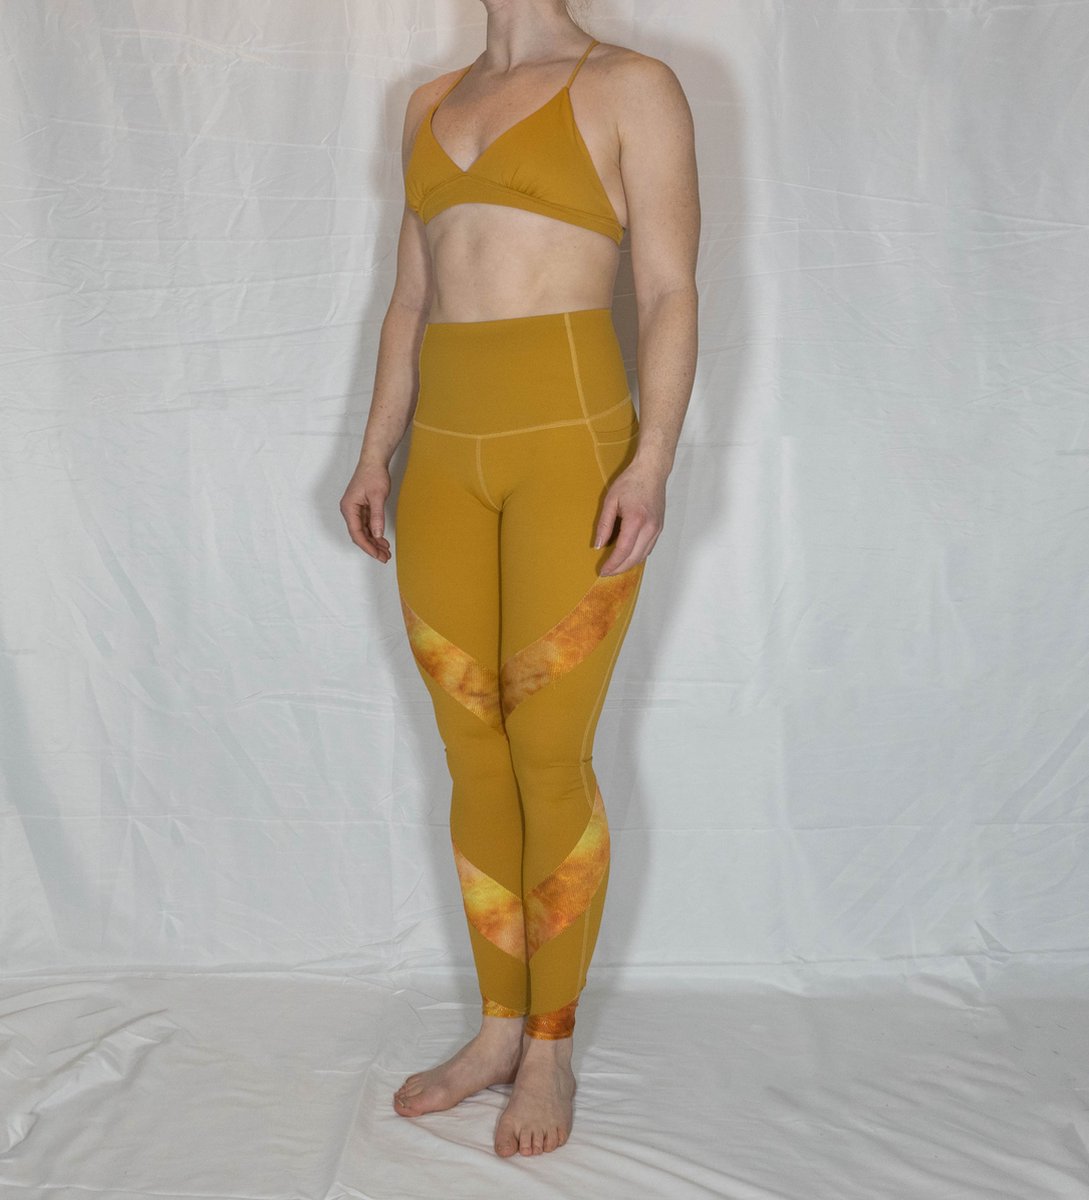 Rooz sportswear - oker geel - glitters - fitness -yoga - sport set - legging - high waist - dames - sportlegging - maat s